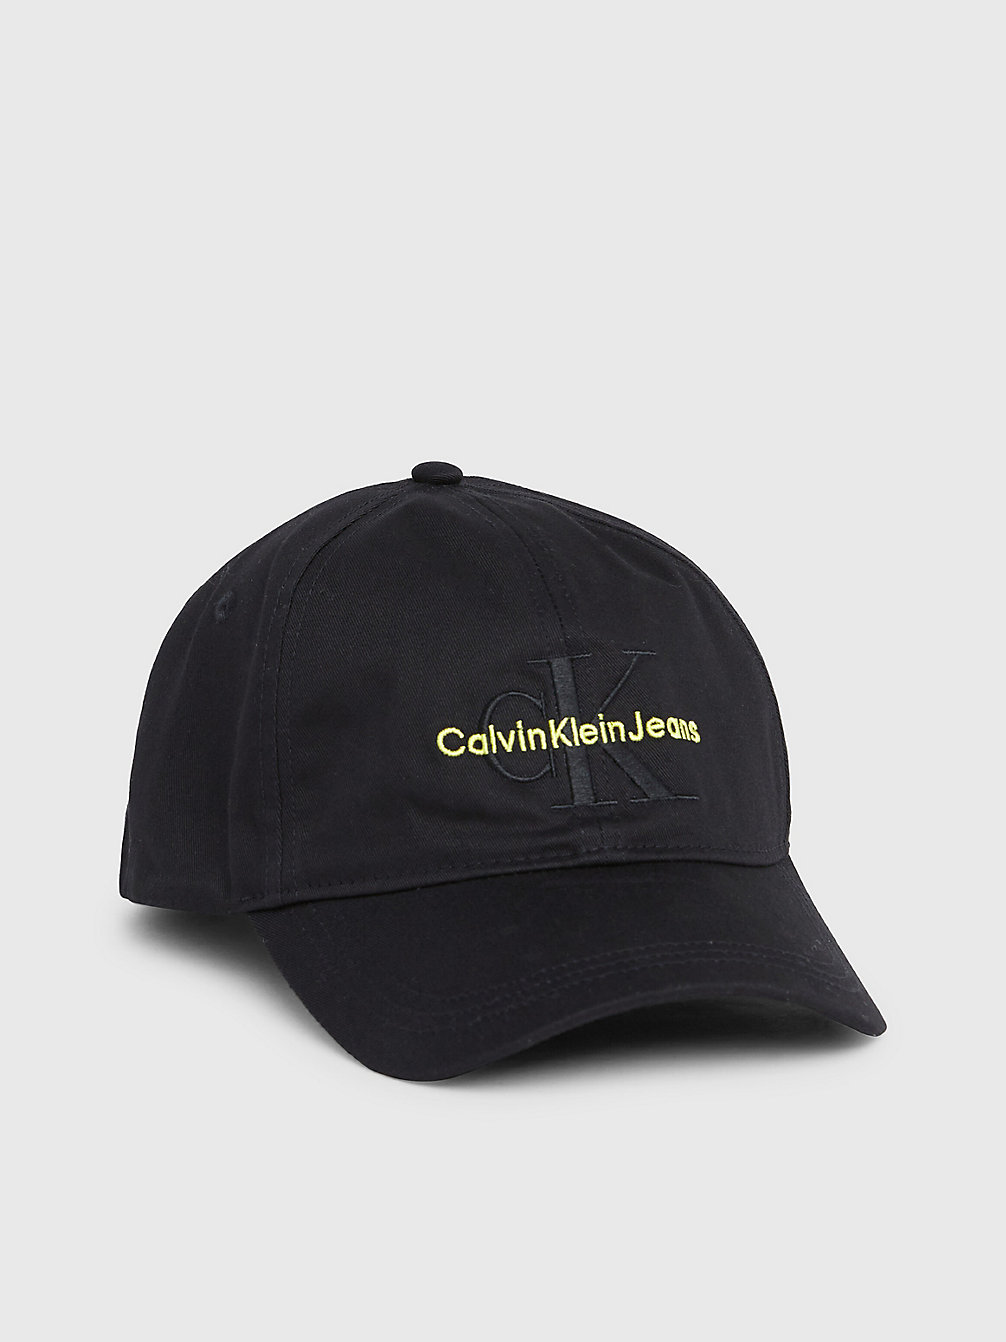 Women's Hats & Caps | Calvin Klein®